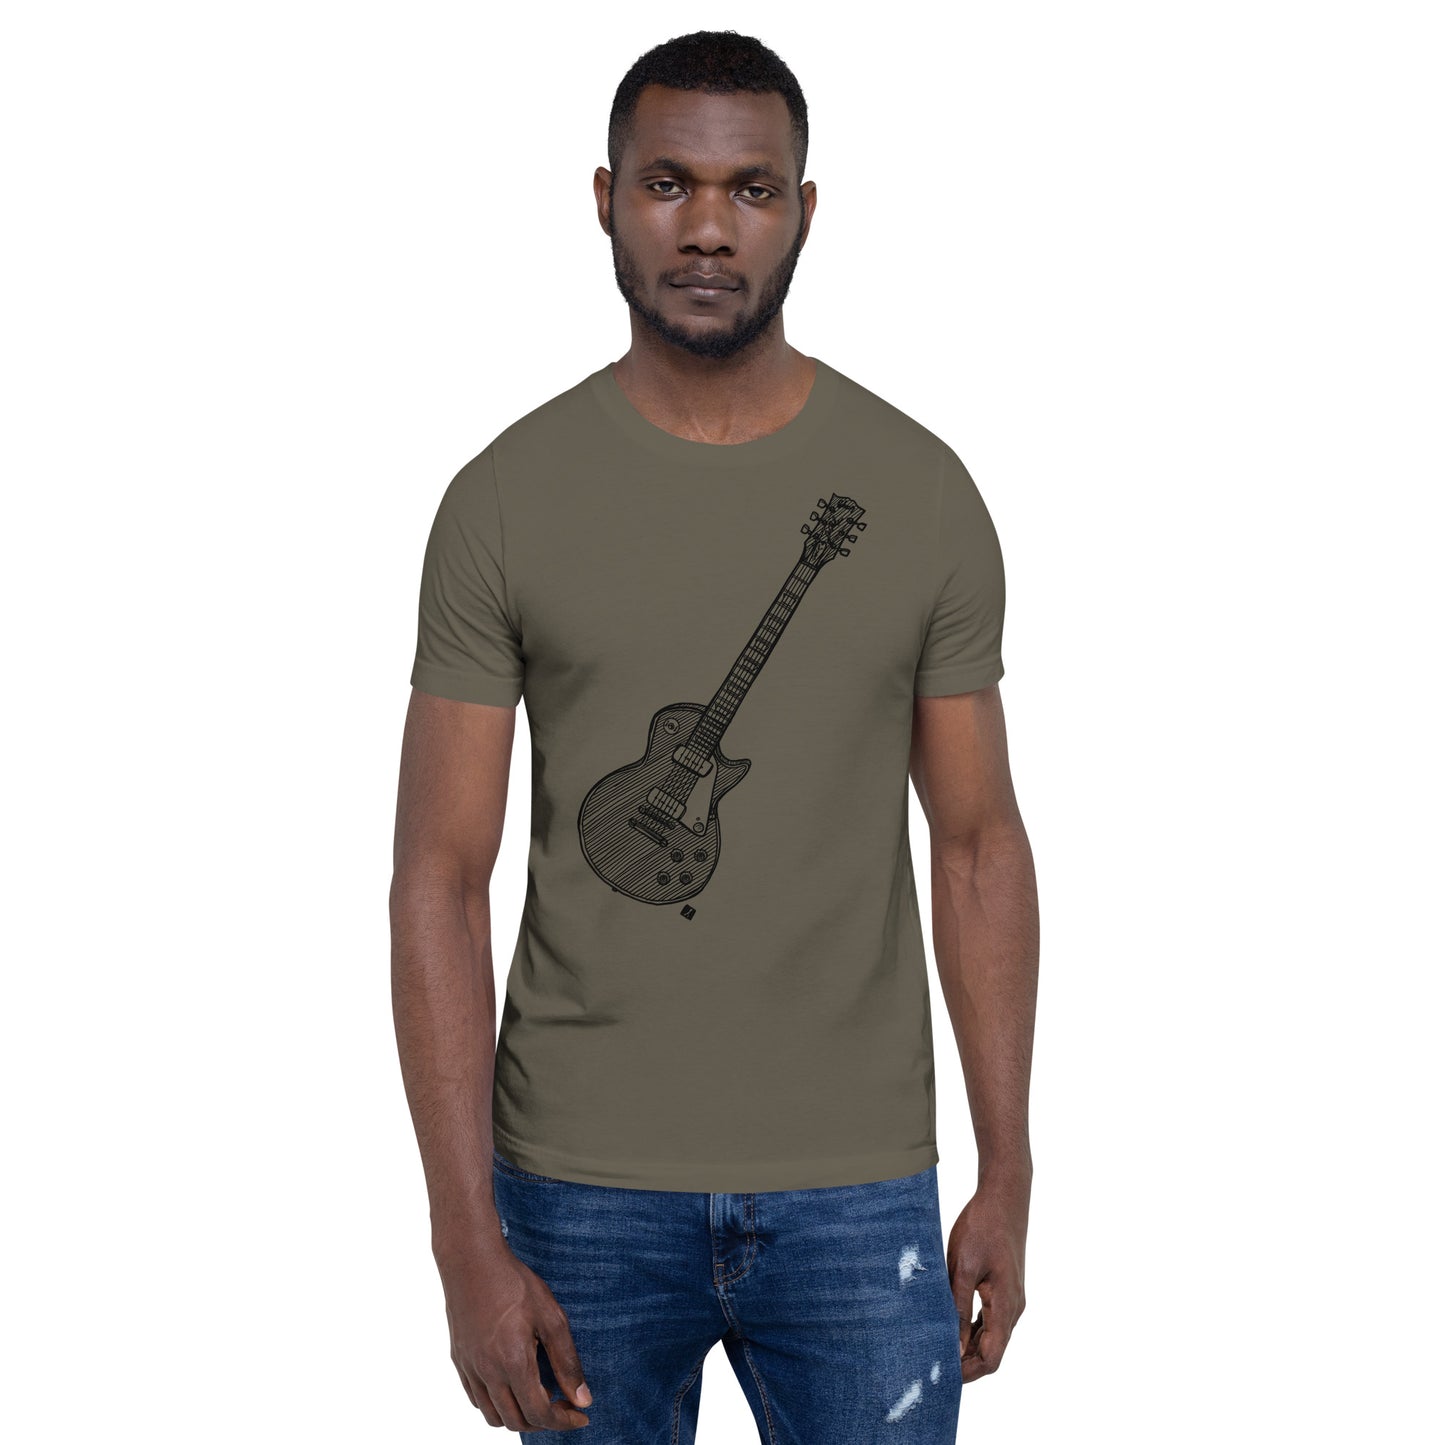 BellavanceInk: Pen And Ink Illustration Of A Vintage Les Paul Electric Guitar On A Short Sleeve T-Shirt